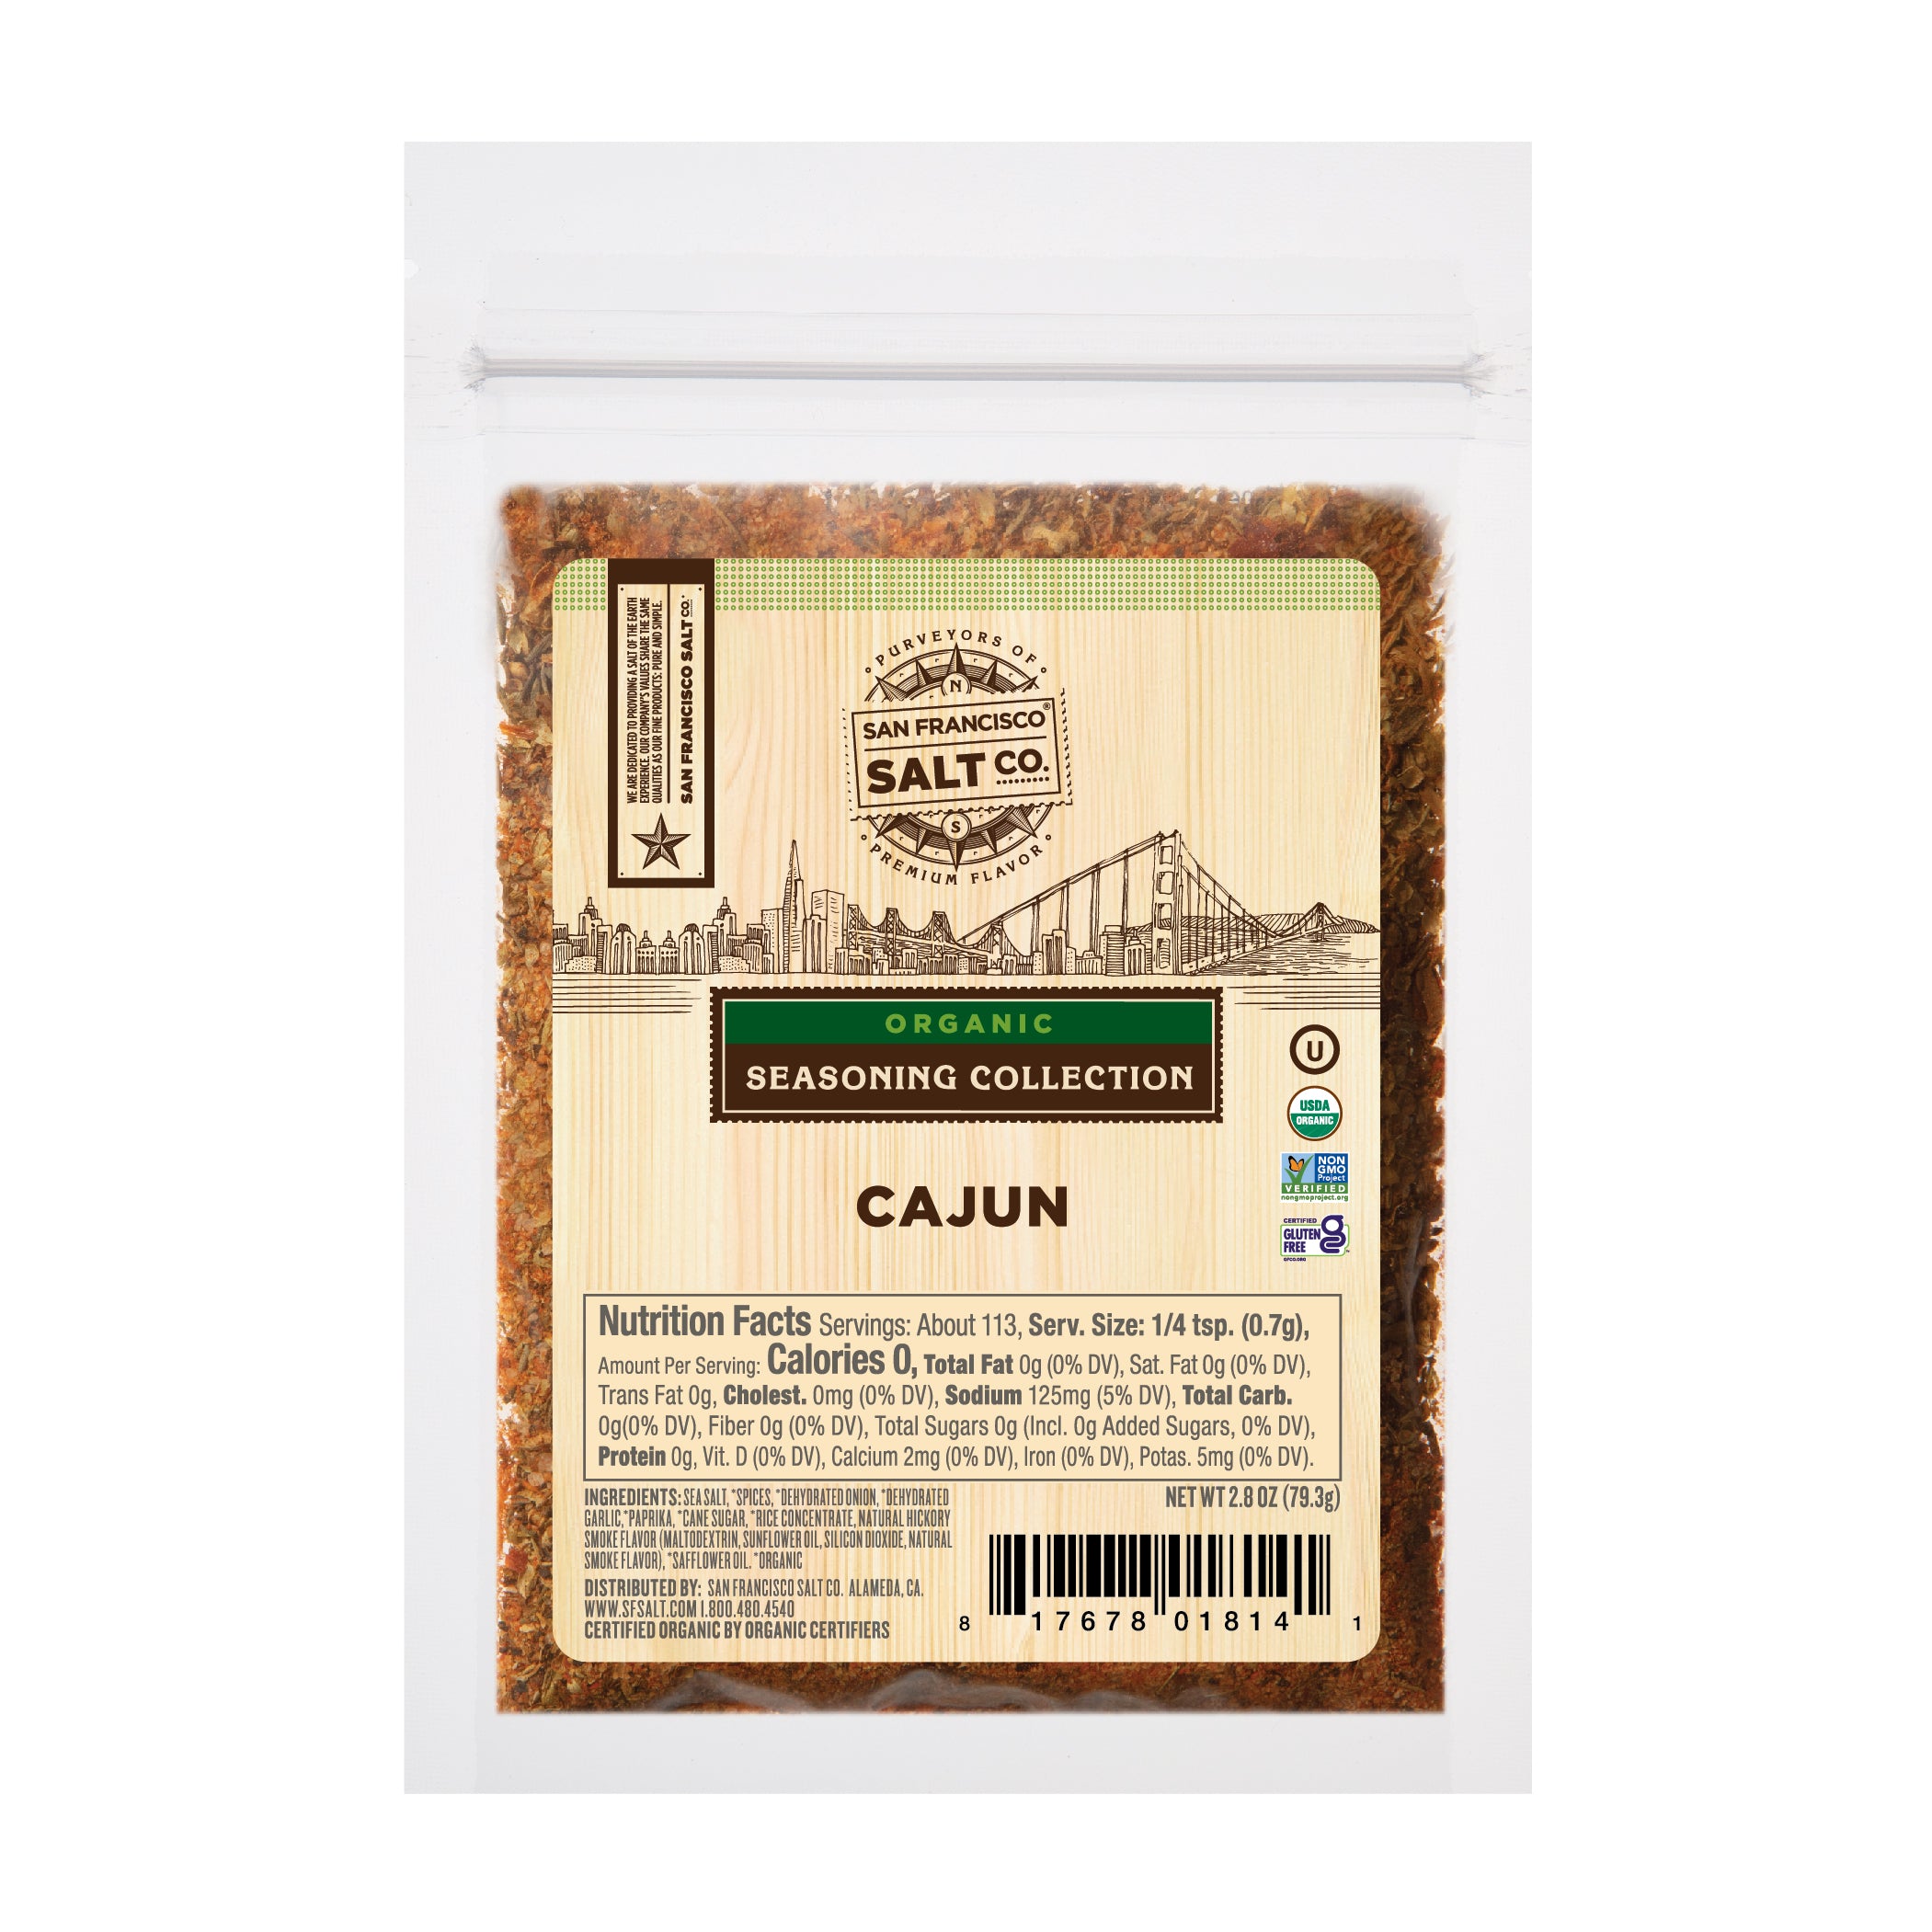 Organic Cajun Spice Blend 2.8 oz Pouch by San Francisco Salt Company